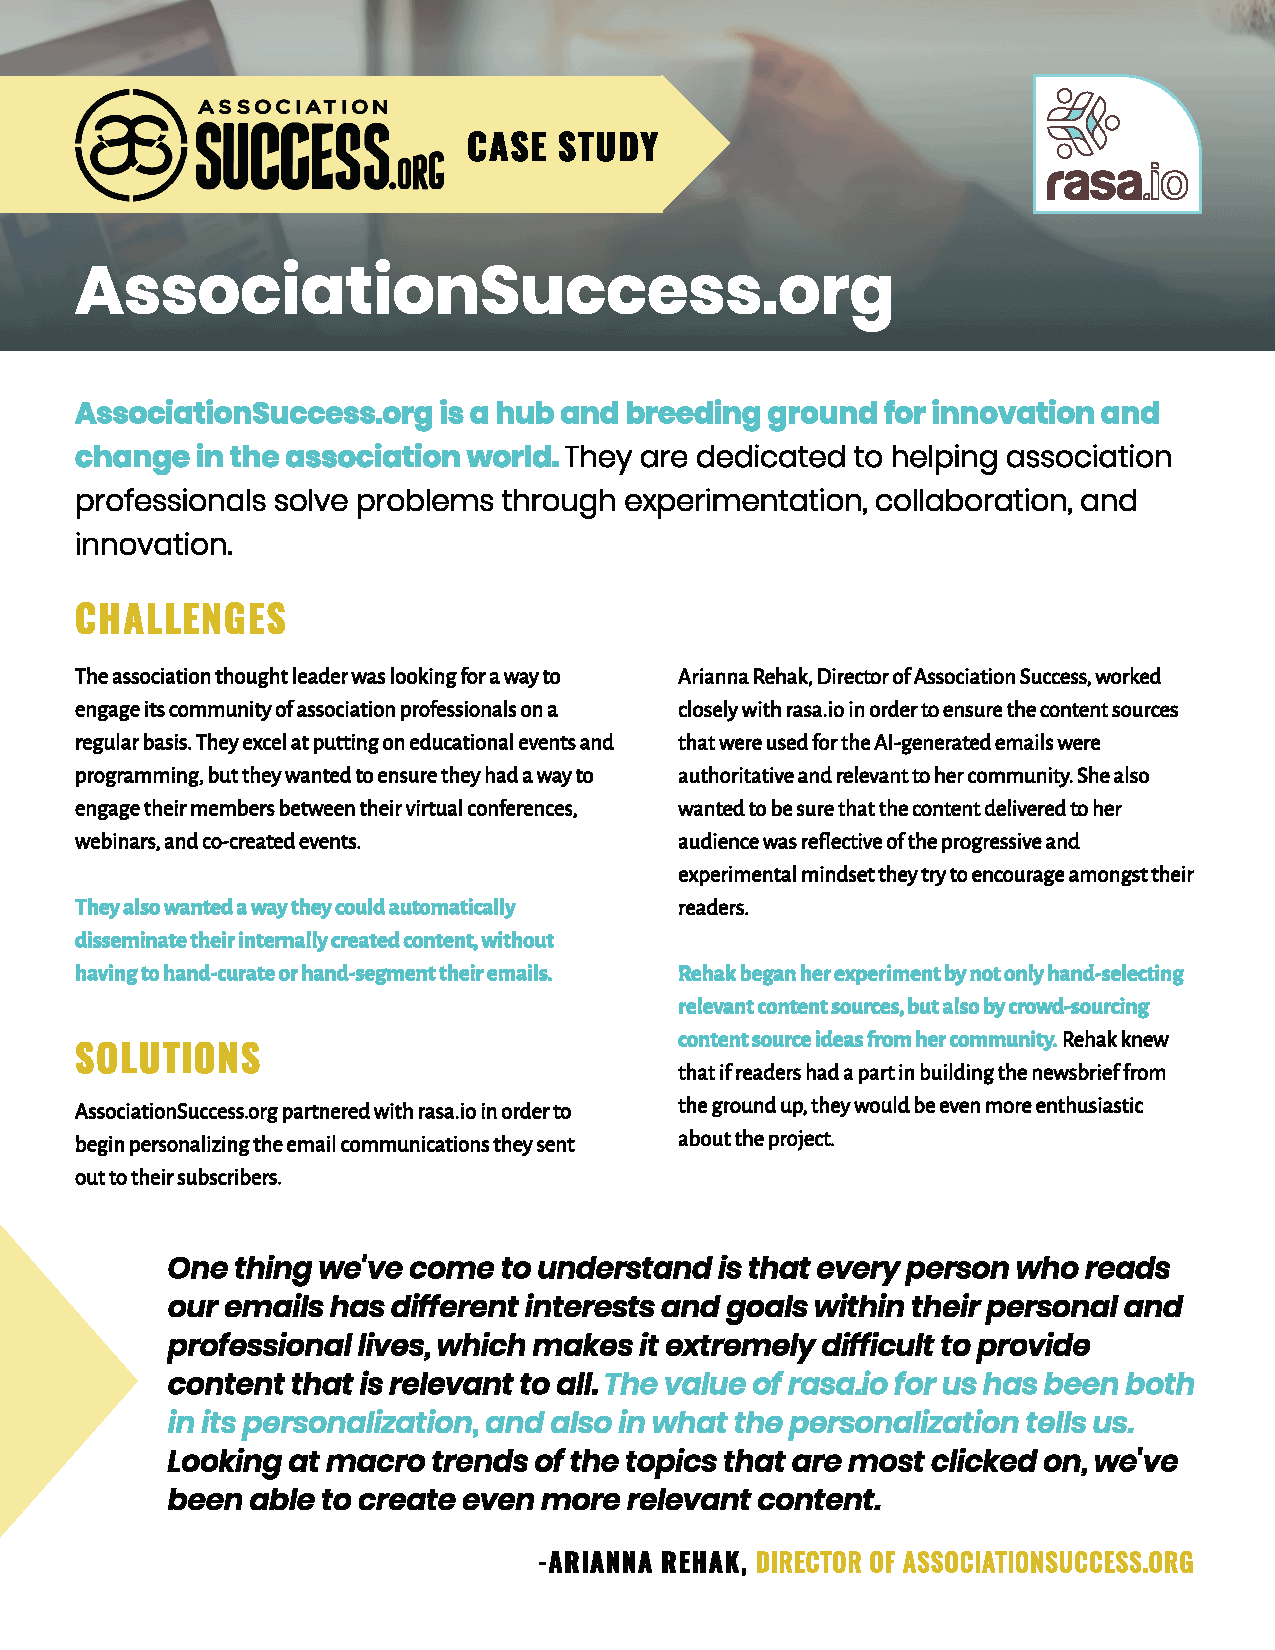 AssociationSuccess.org-Case-Study-2.0-Digital_Page_1